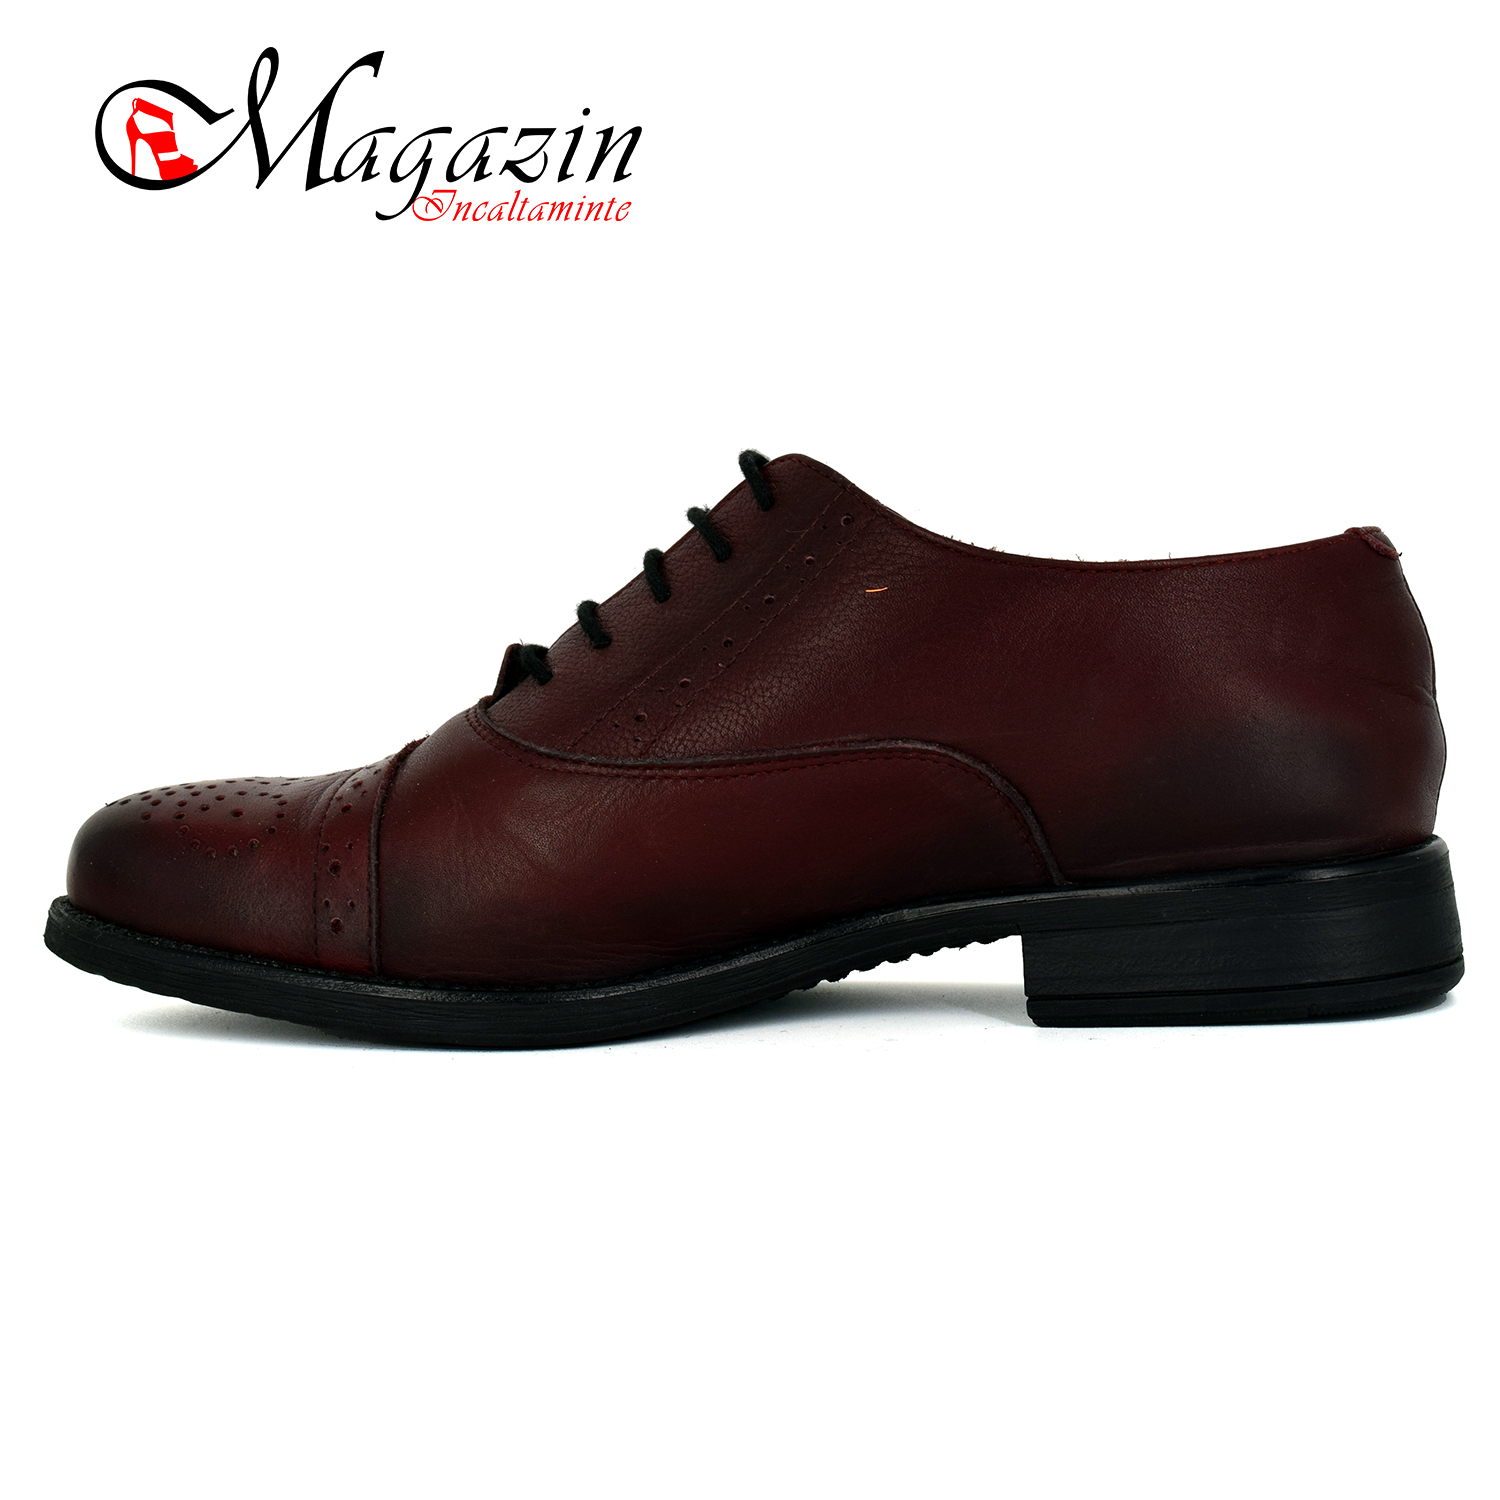 Pantofi dama piele naturala - Caspian - Model Mania Bordo